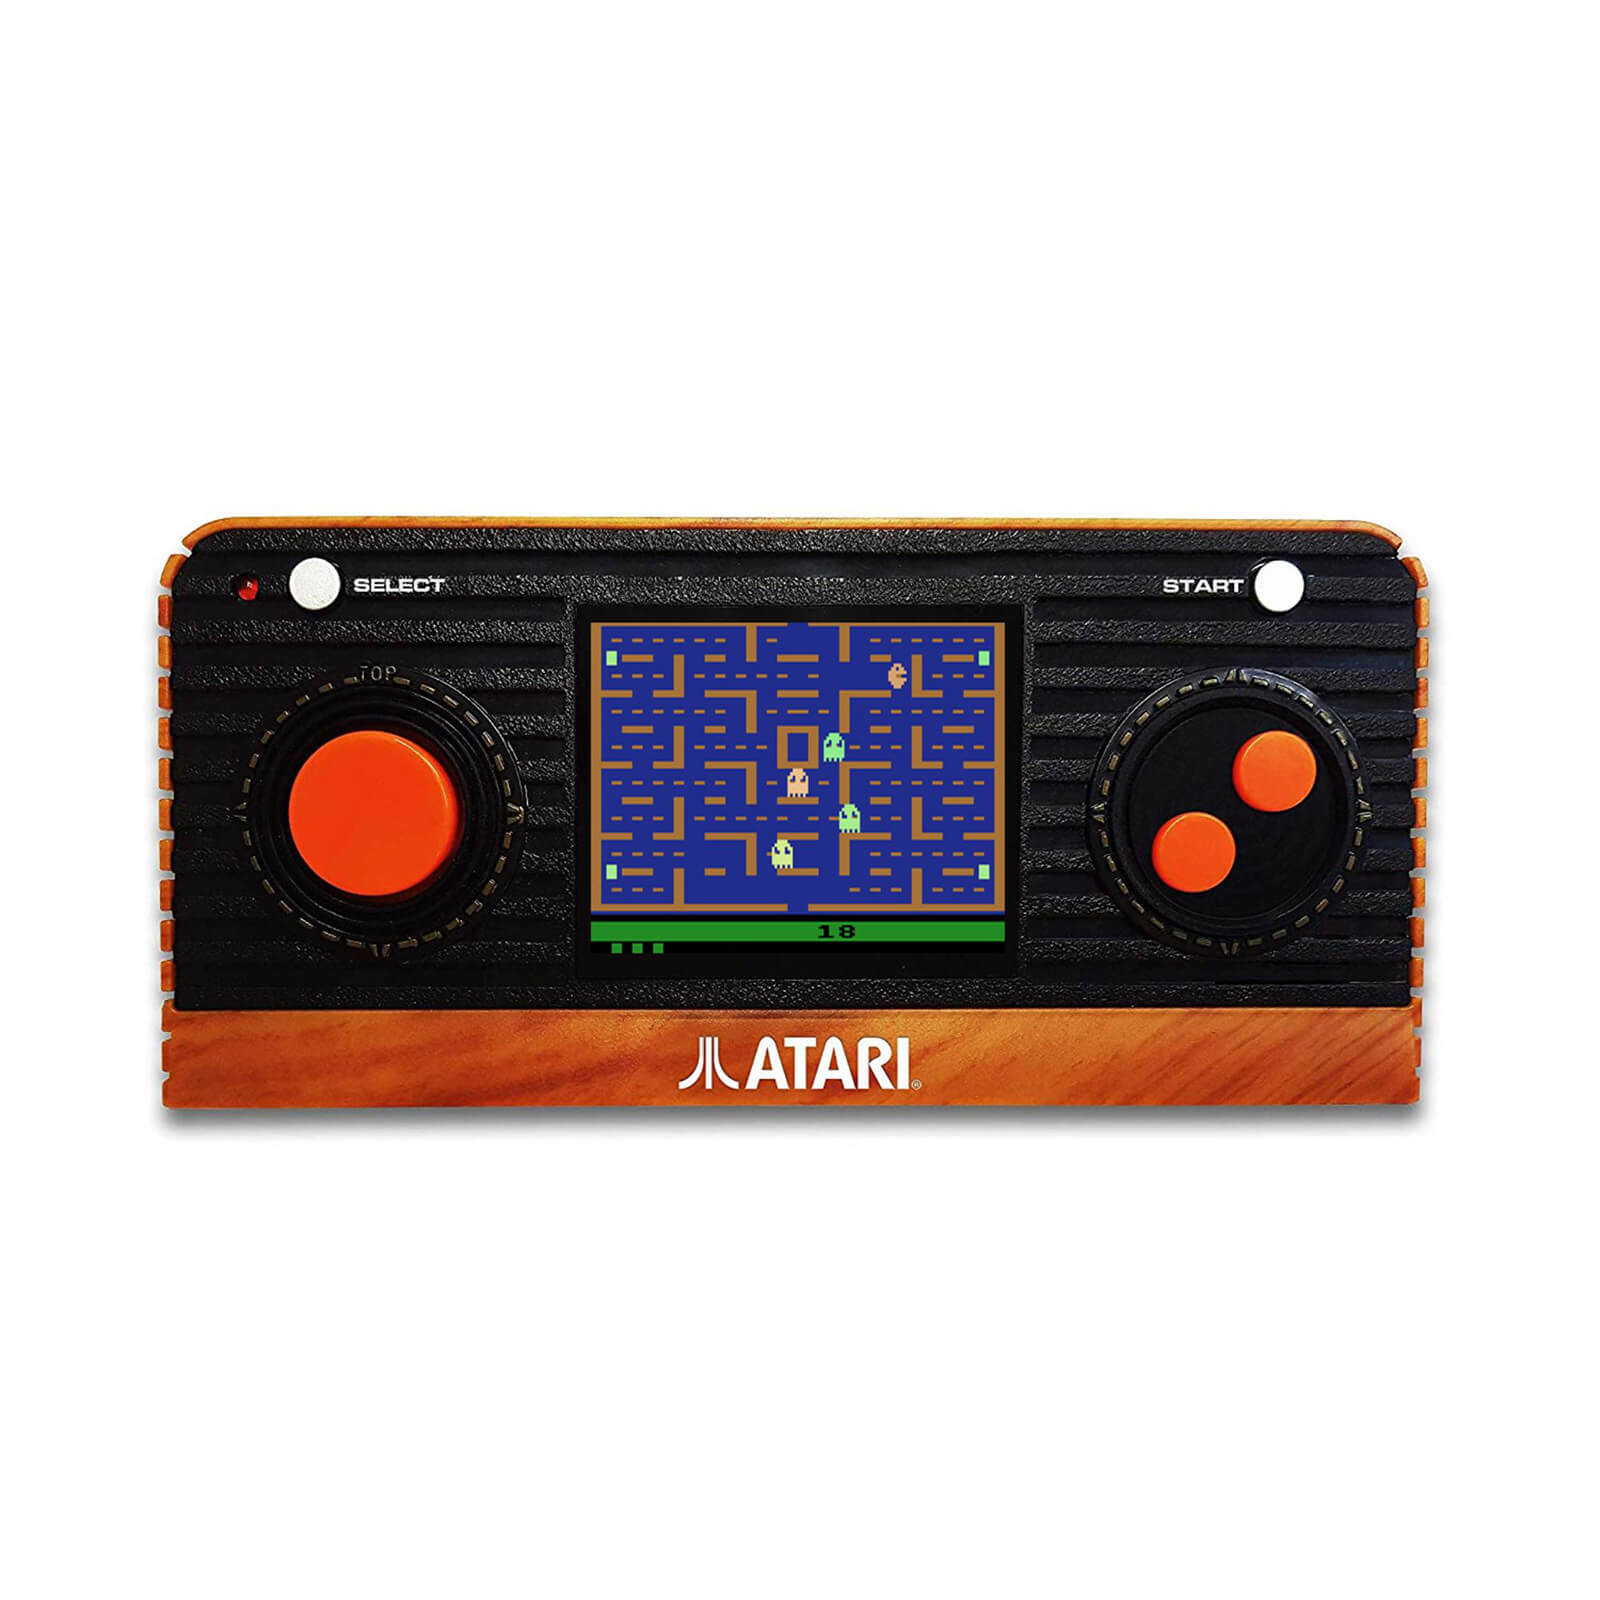 Zavvi - Atari Retro Handheld Pac-Man Edition für nur 24,48€ inkl. Versand